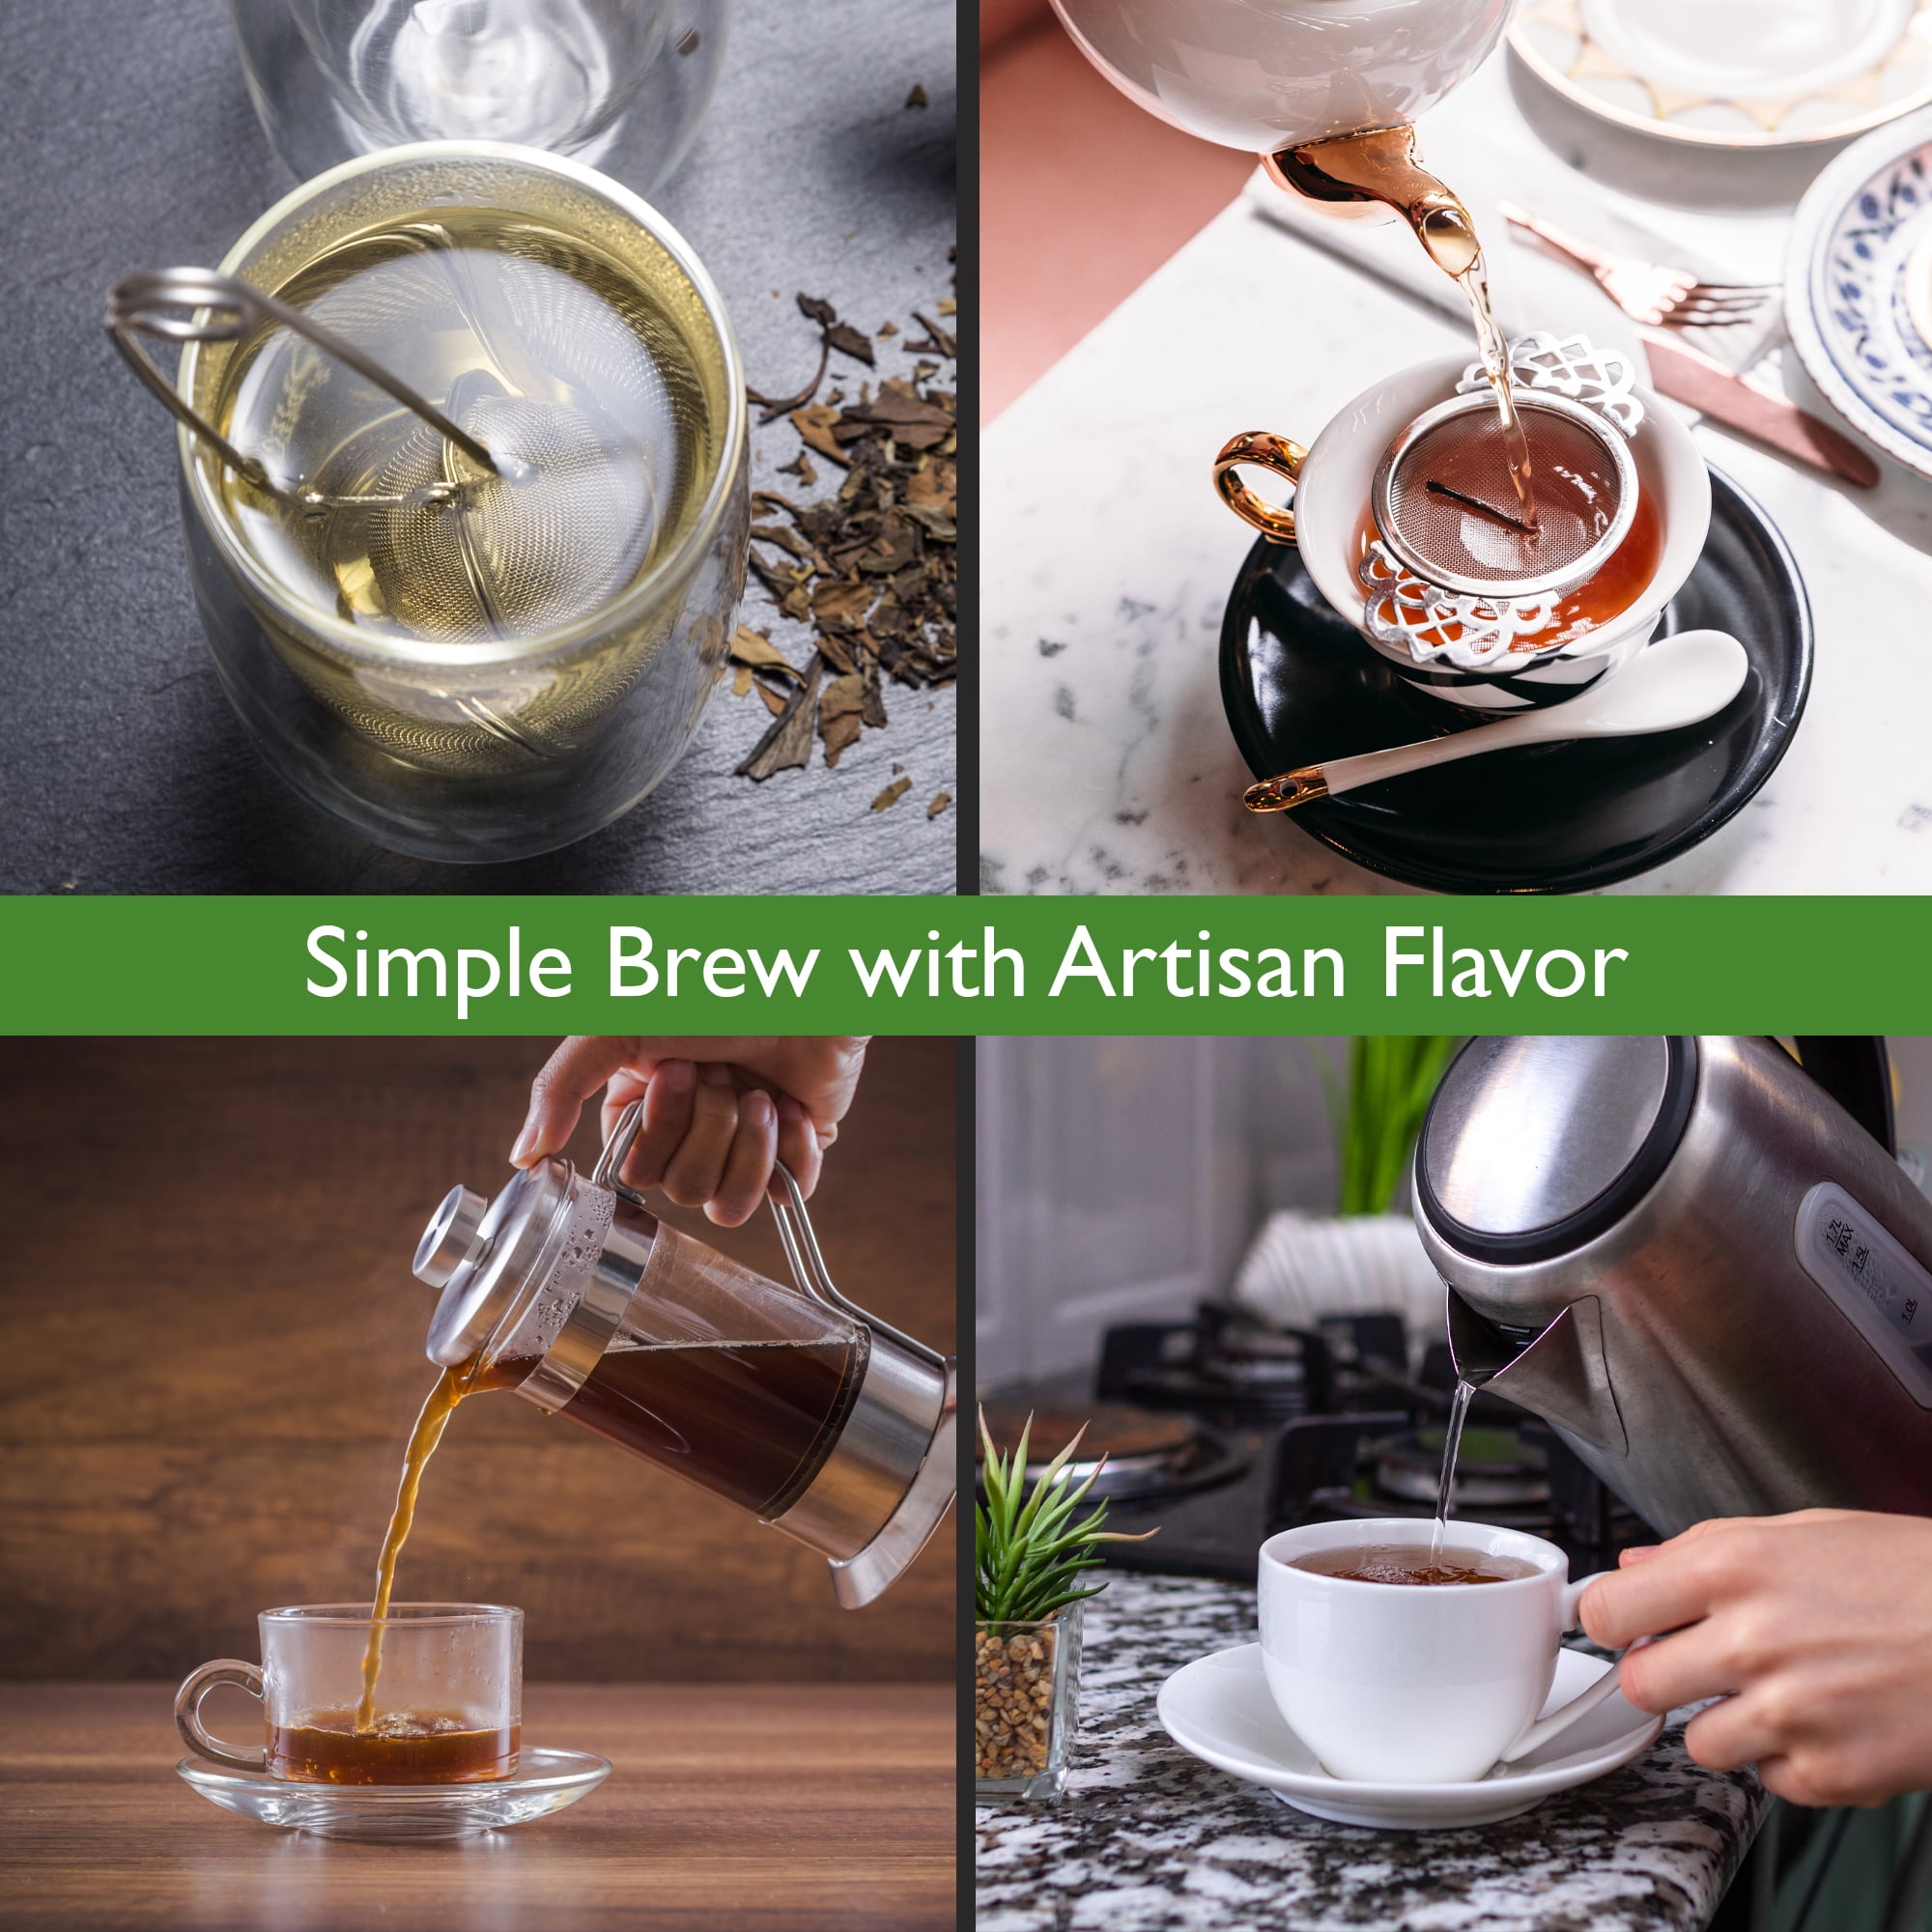 How to Brew Loose Leaf Tea - Champagne Tastes®